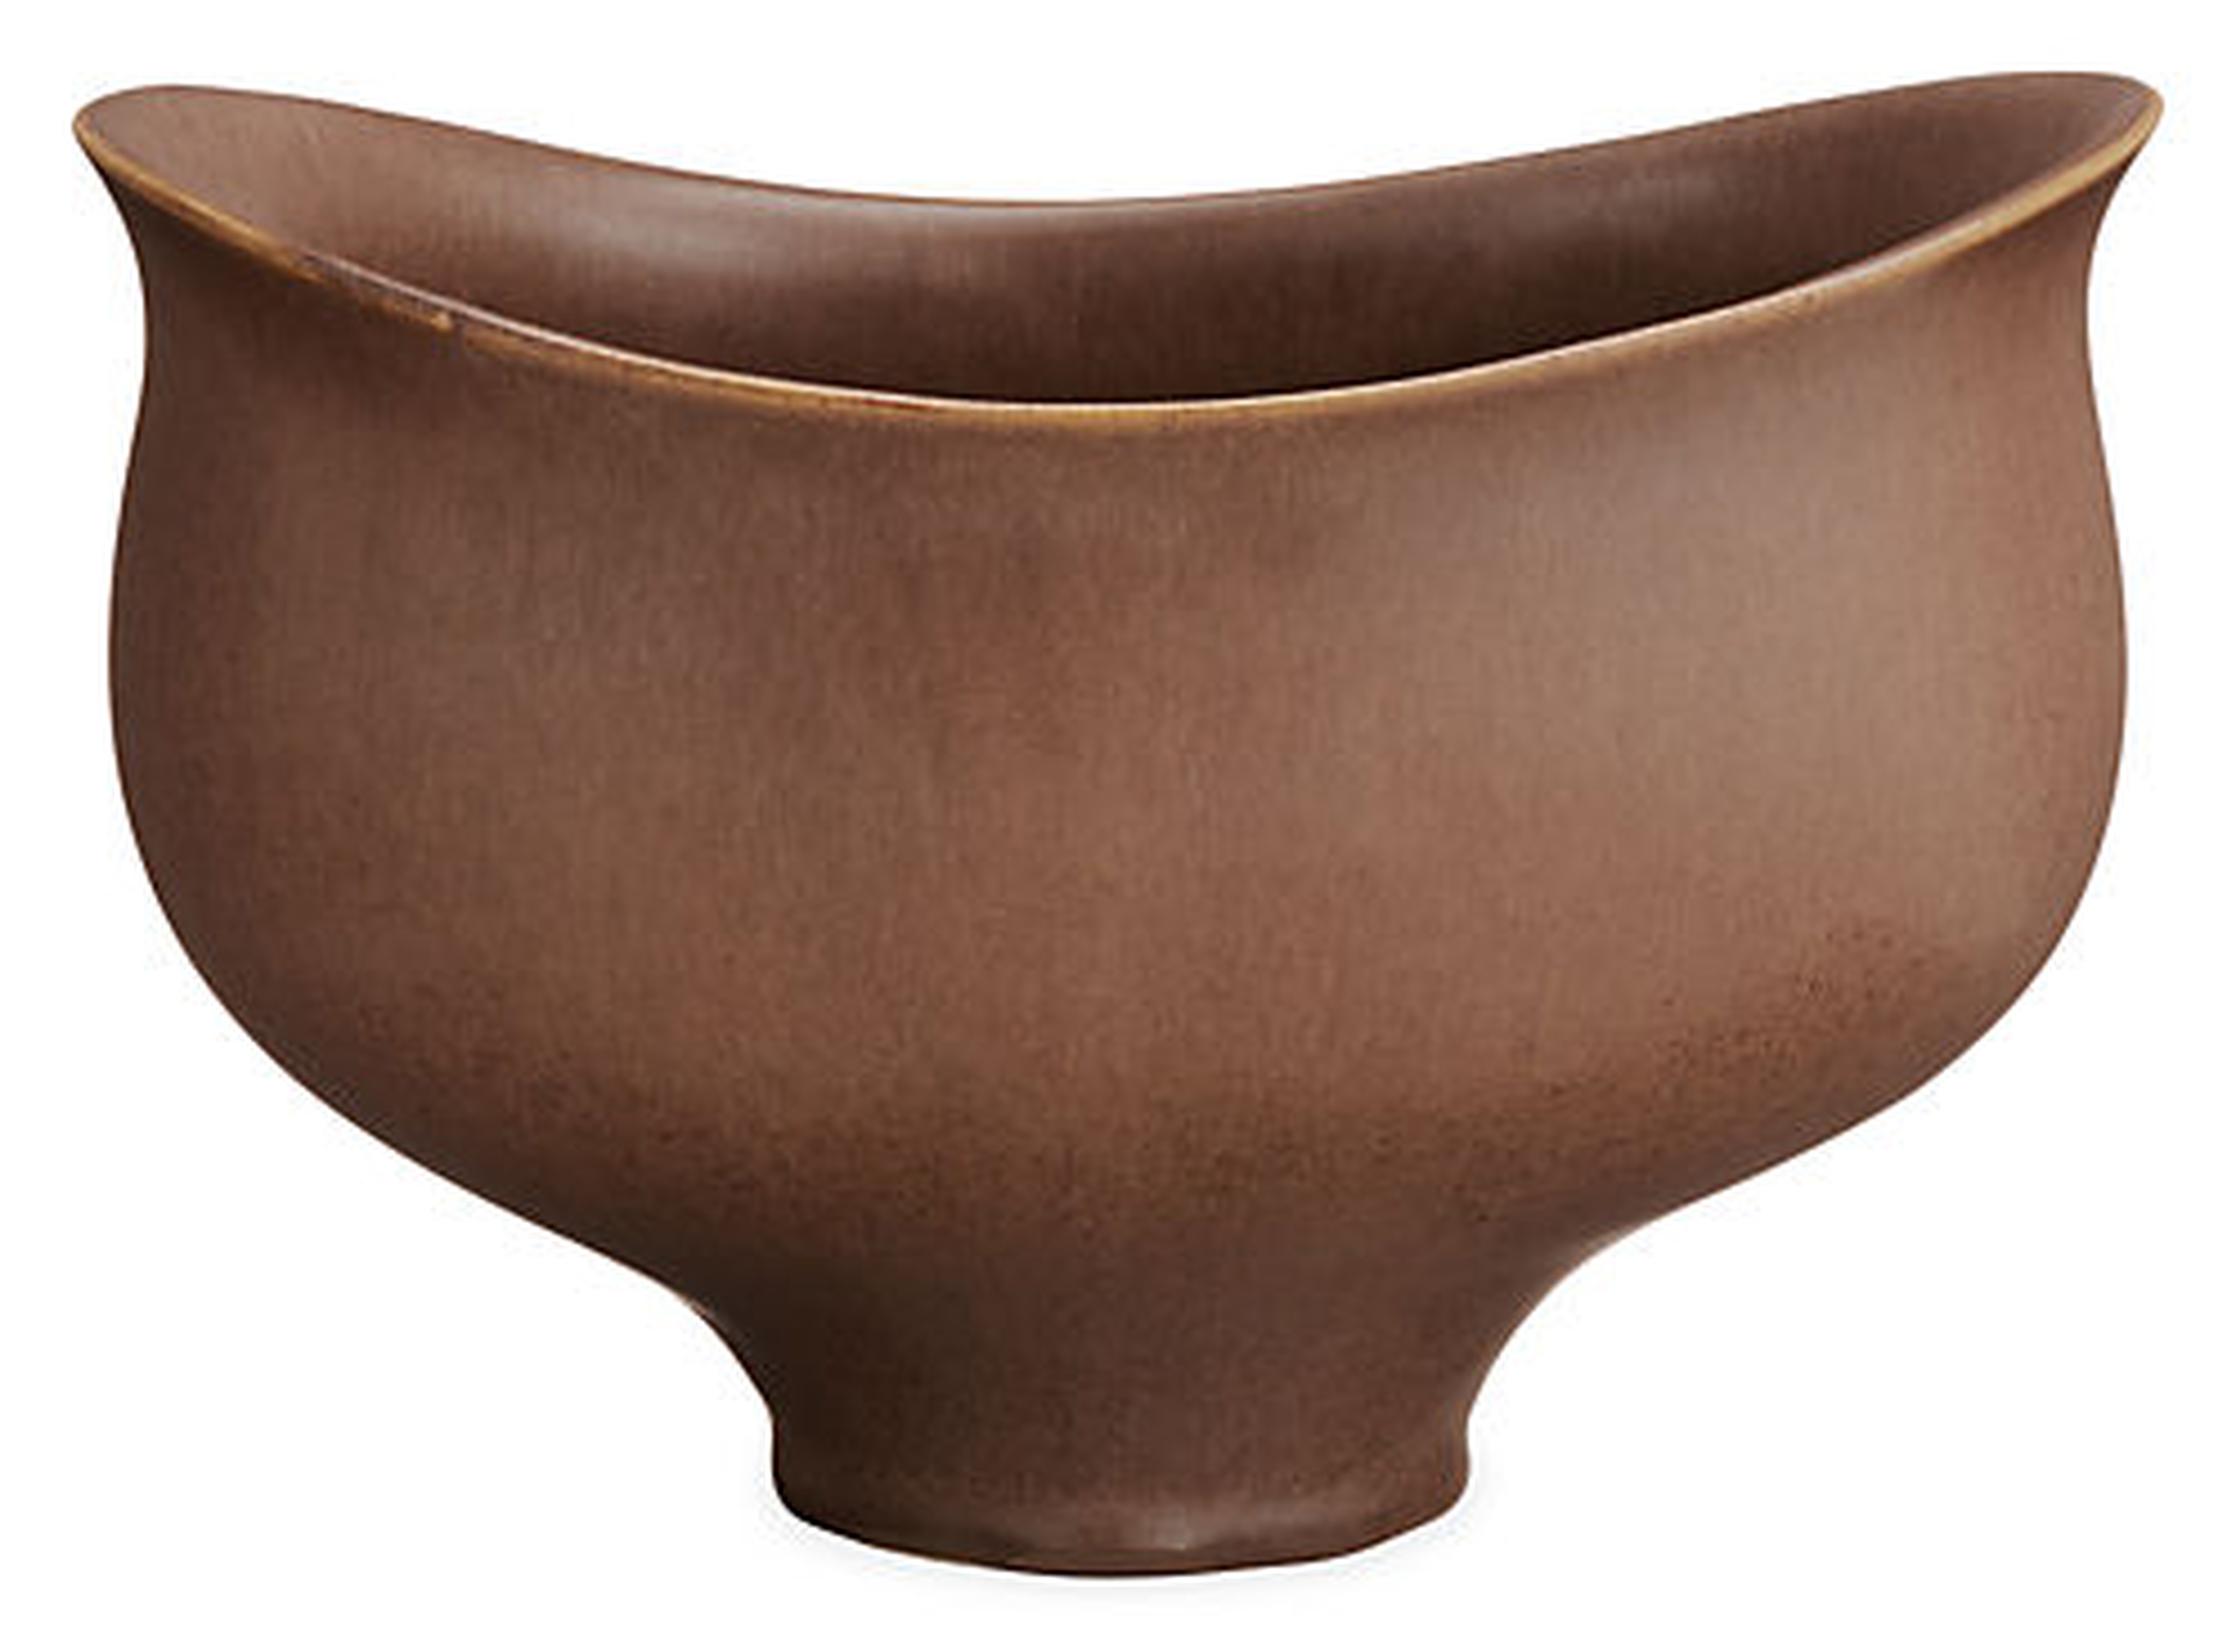 Althea Vases & Bowl in Sienna -Medium Bowl - Room & Board